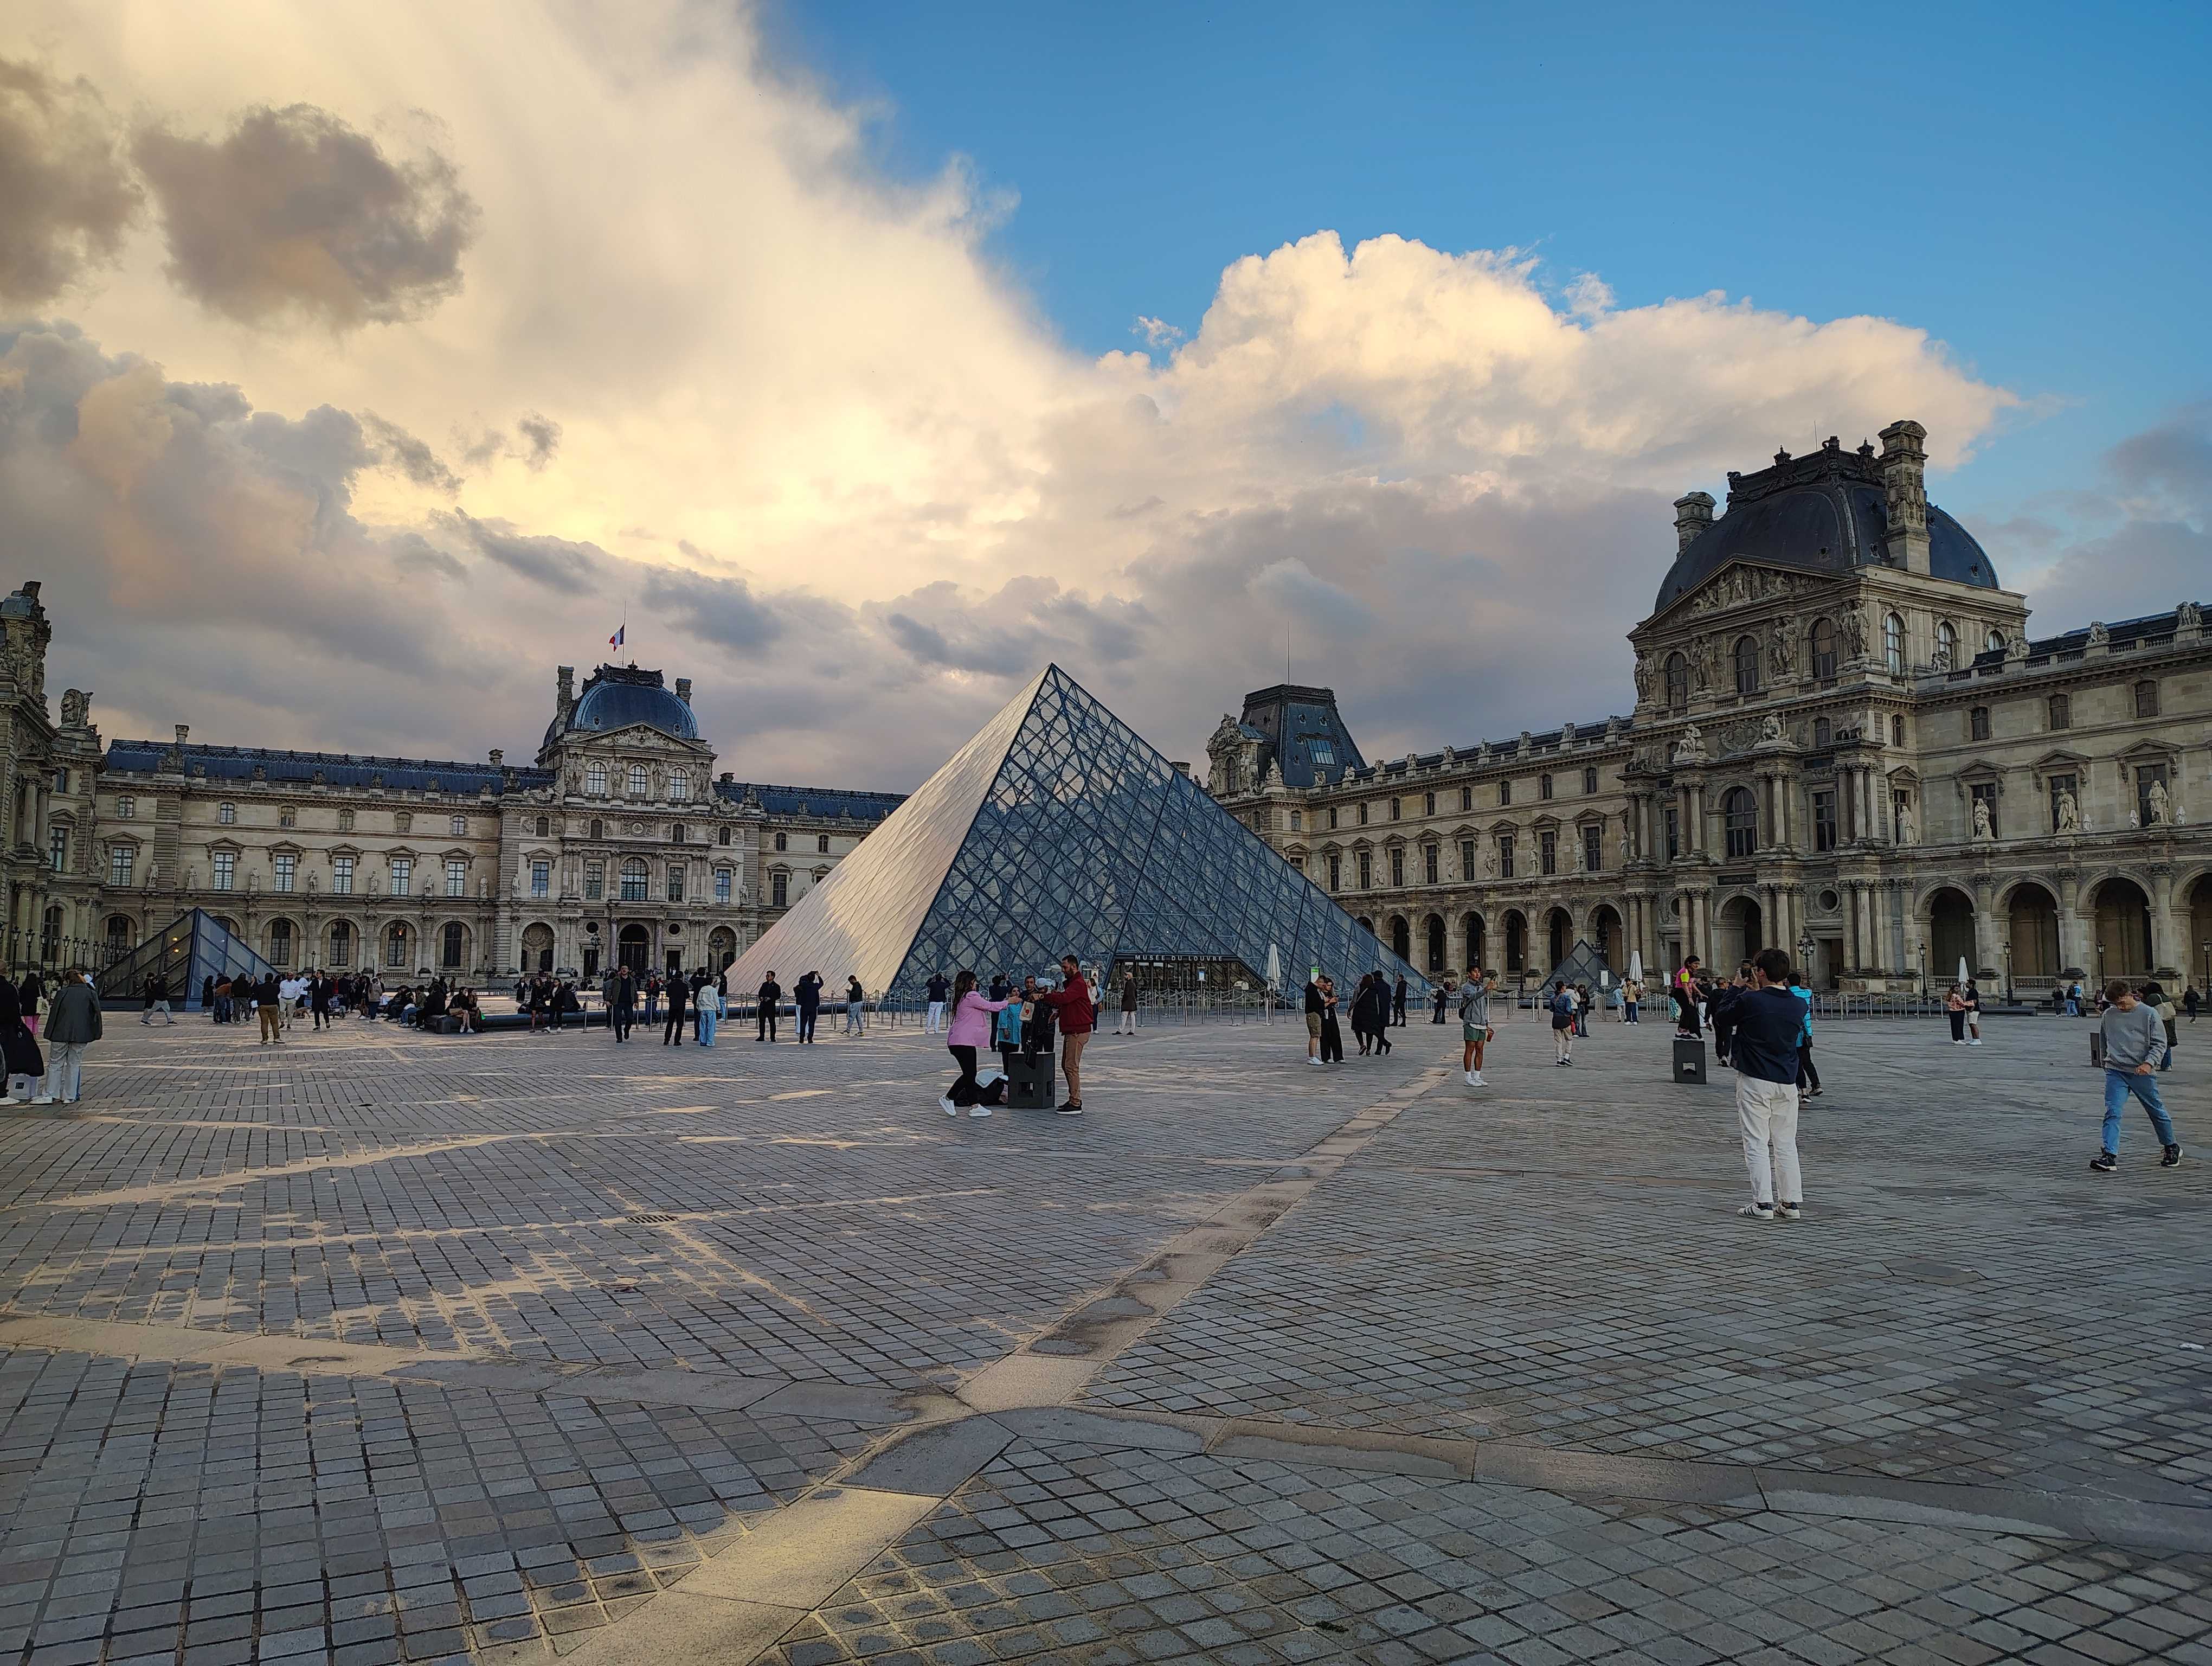 The Pyramide du Louvre